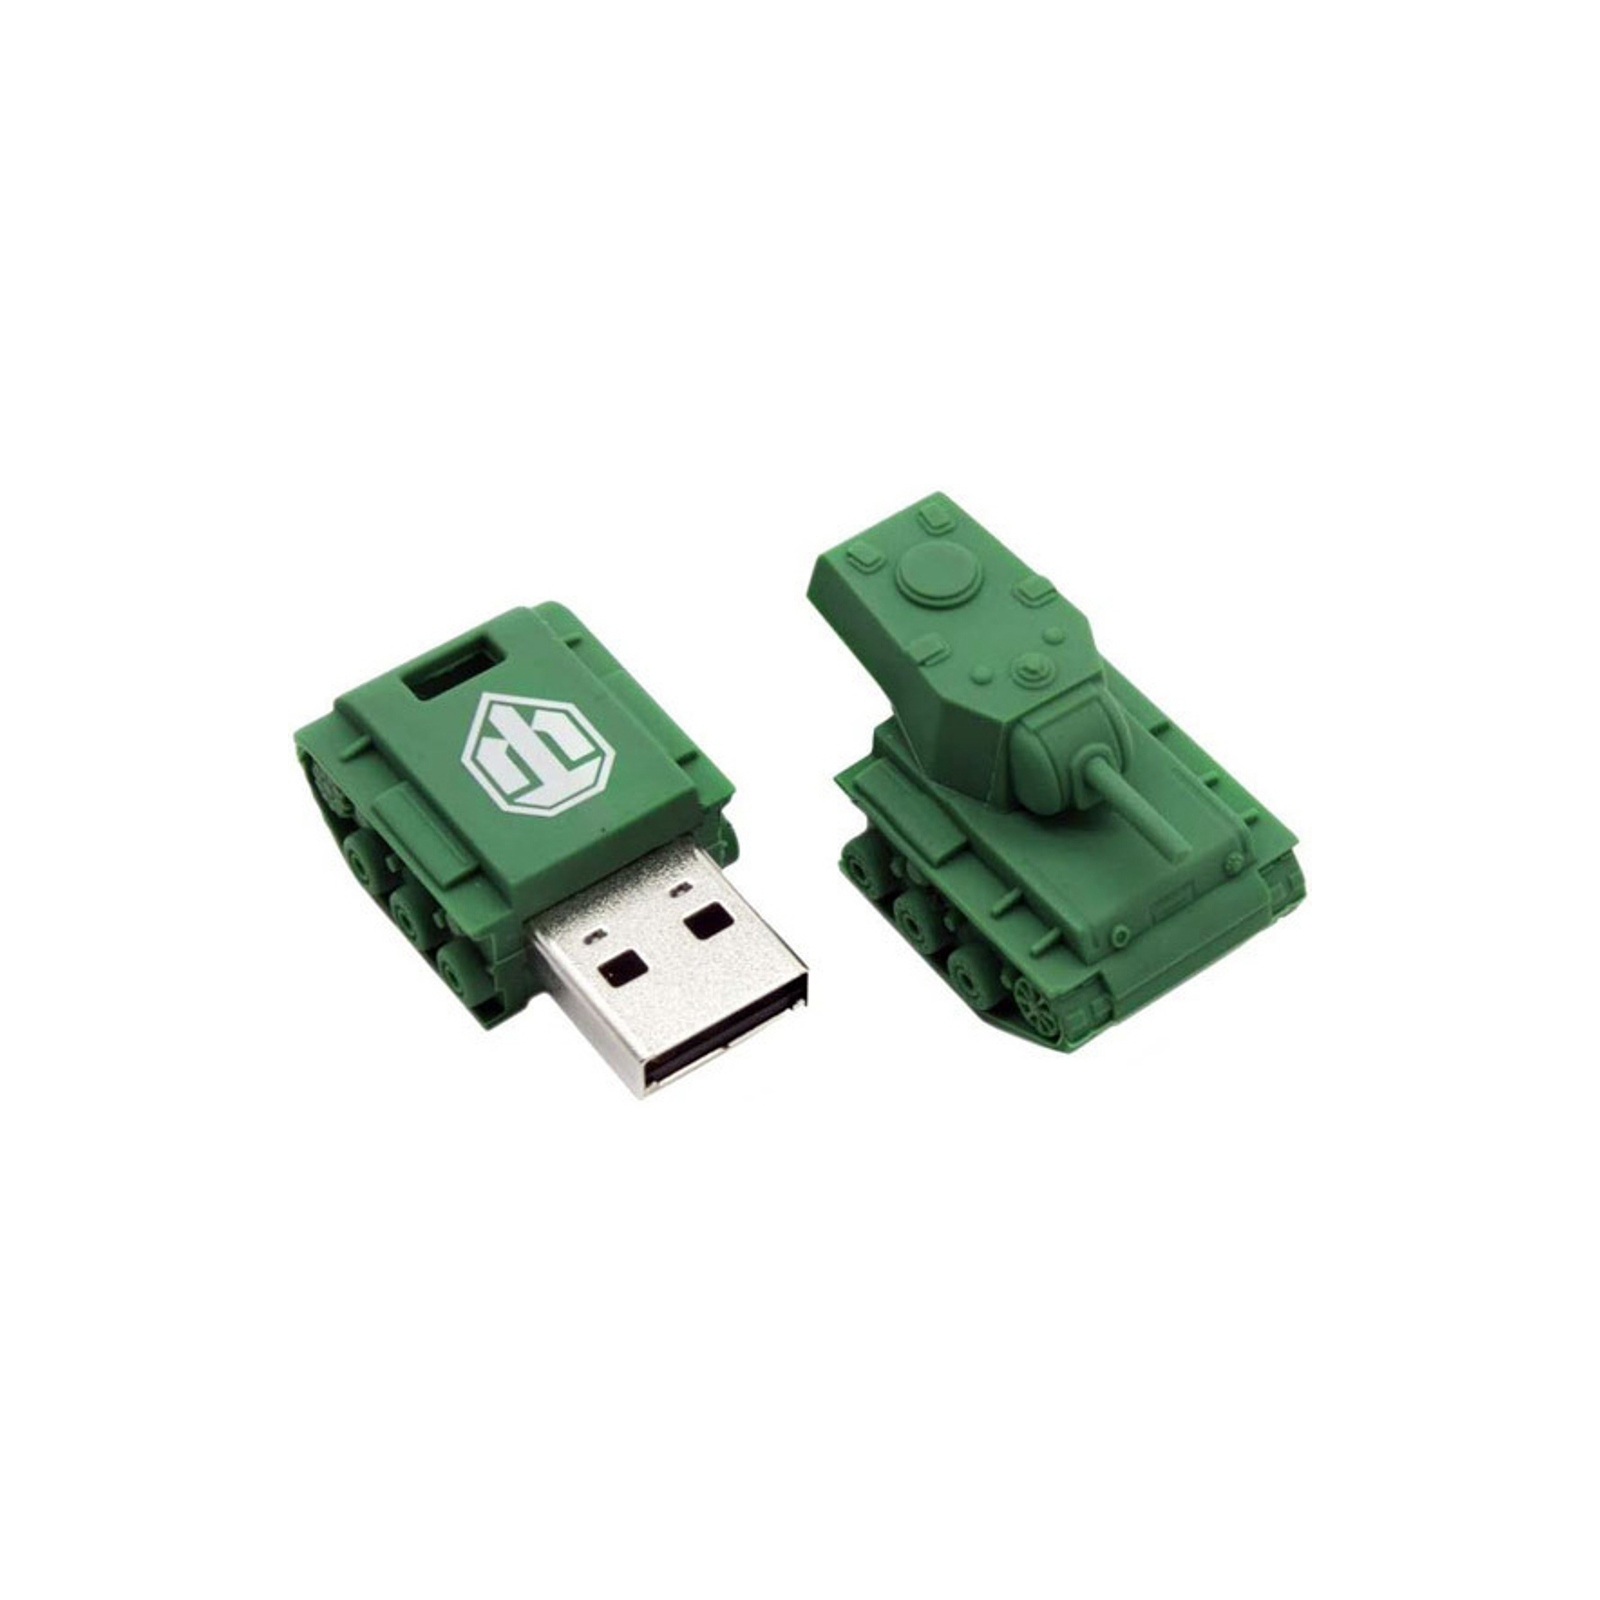 USB флеш накопитель Kingston 32 GB Custom Rubber Tank (DT-TANK/32GB) изображение 3